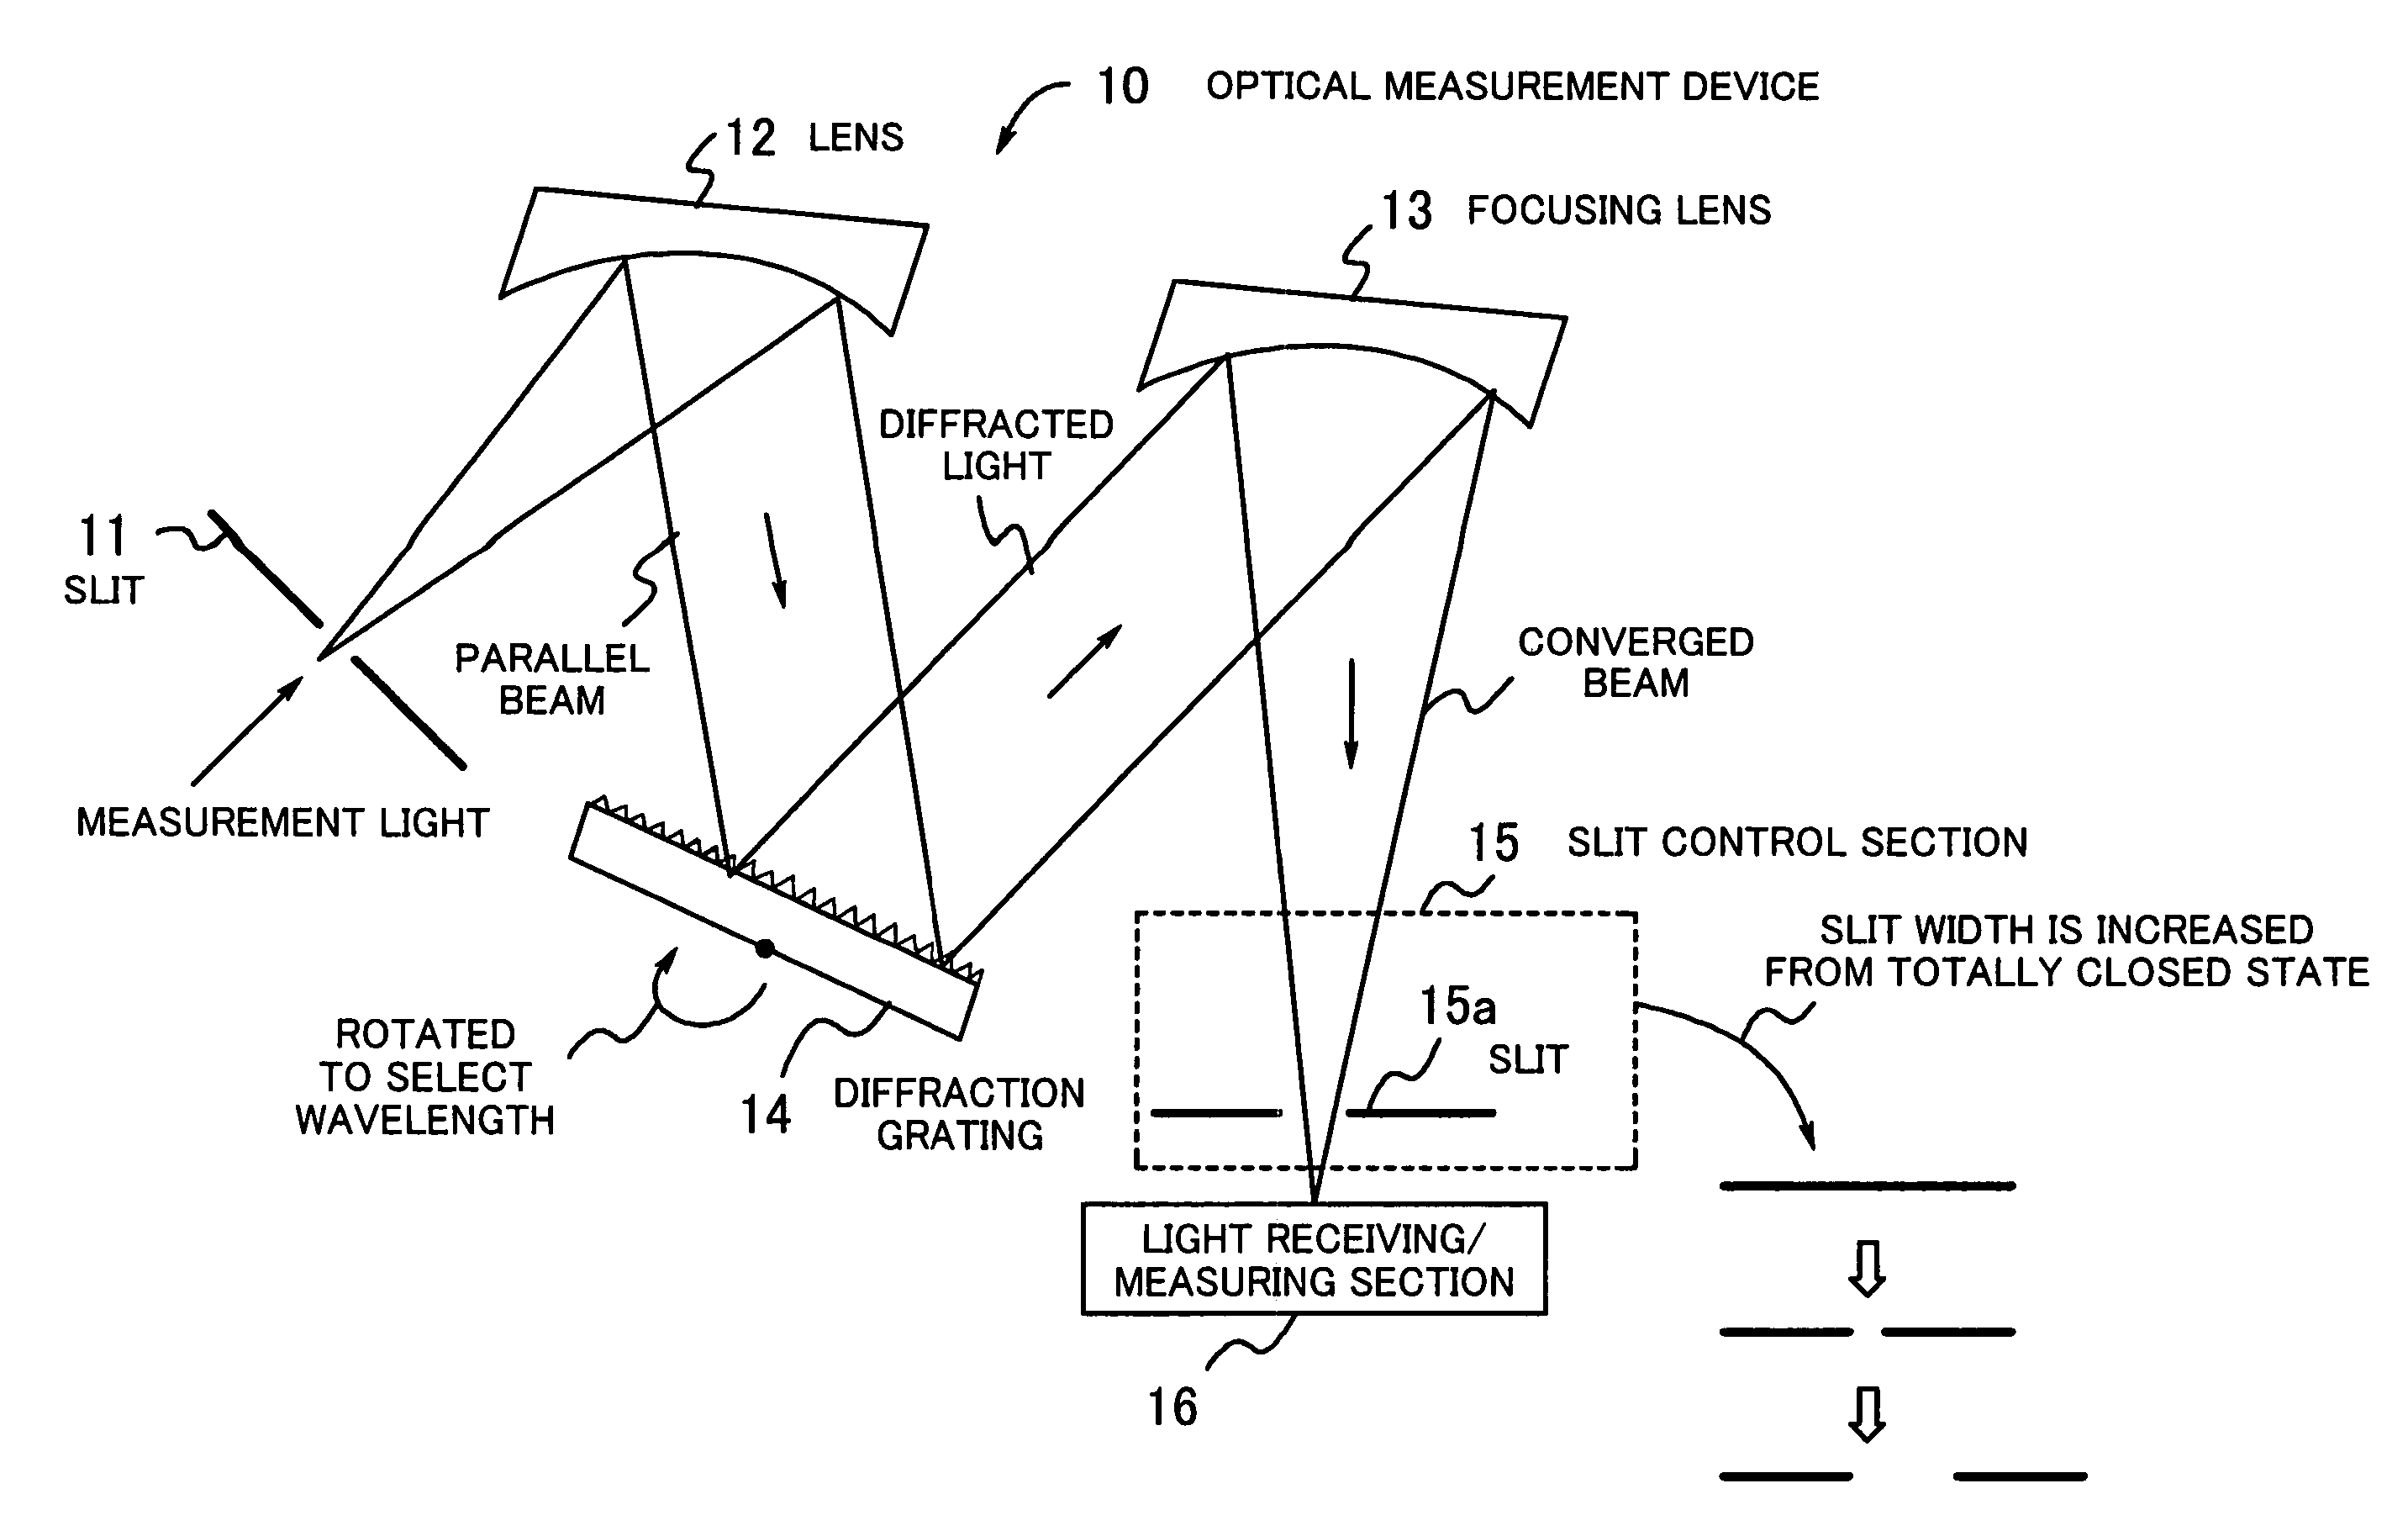 Optical measurement device